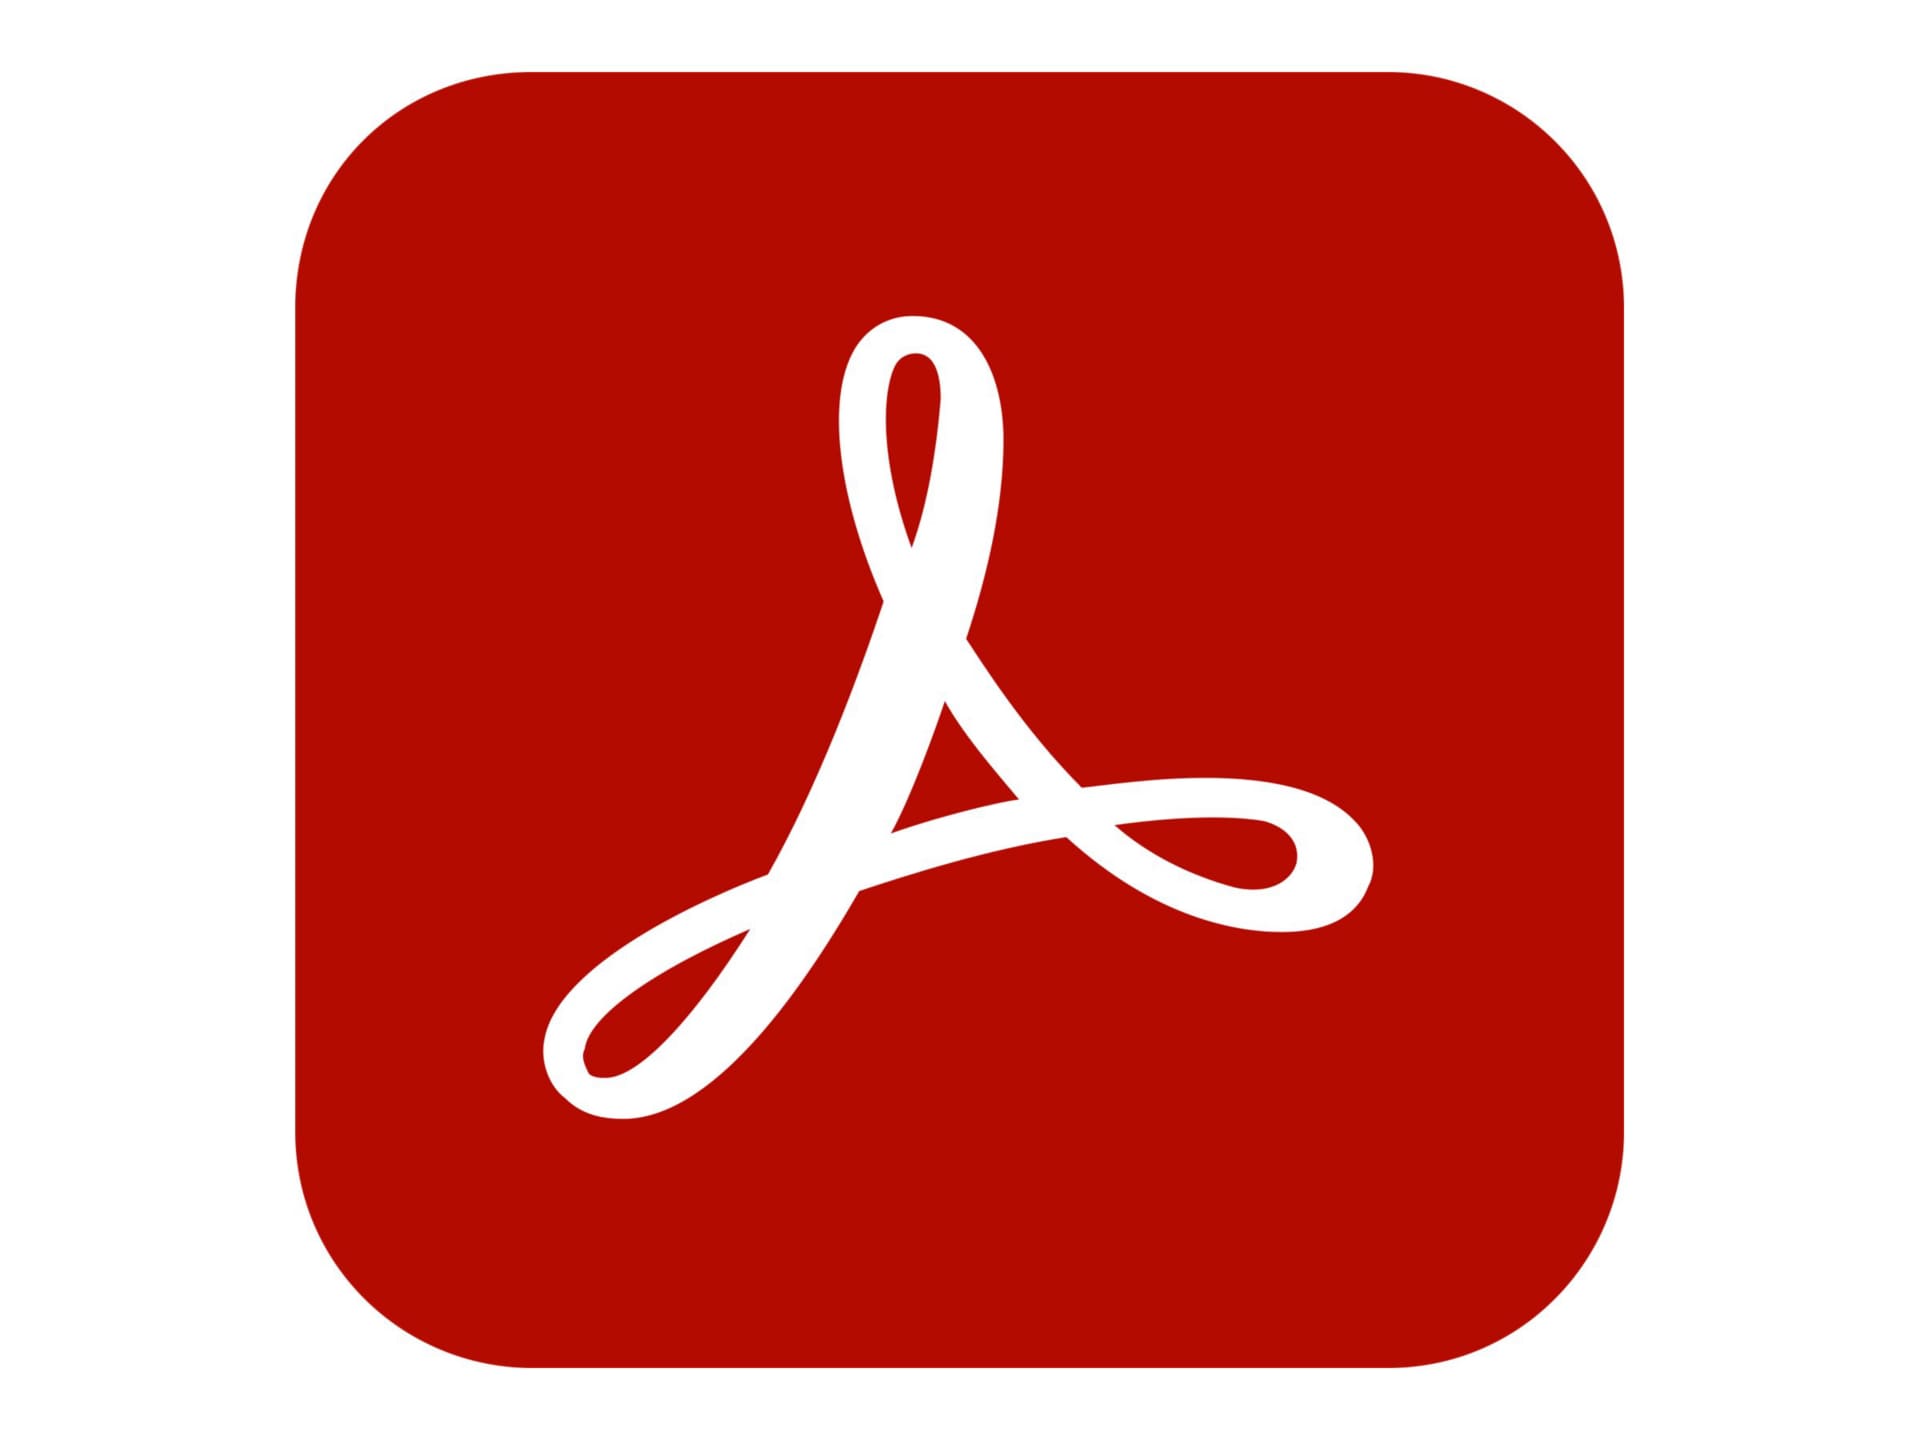 Adobe Acrobat Pro for enterprise - Subscription New (9 months) - 1 named user